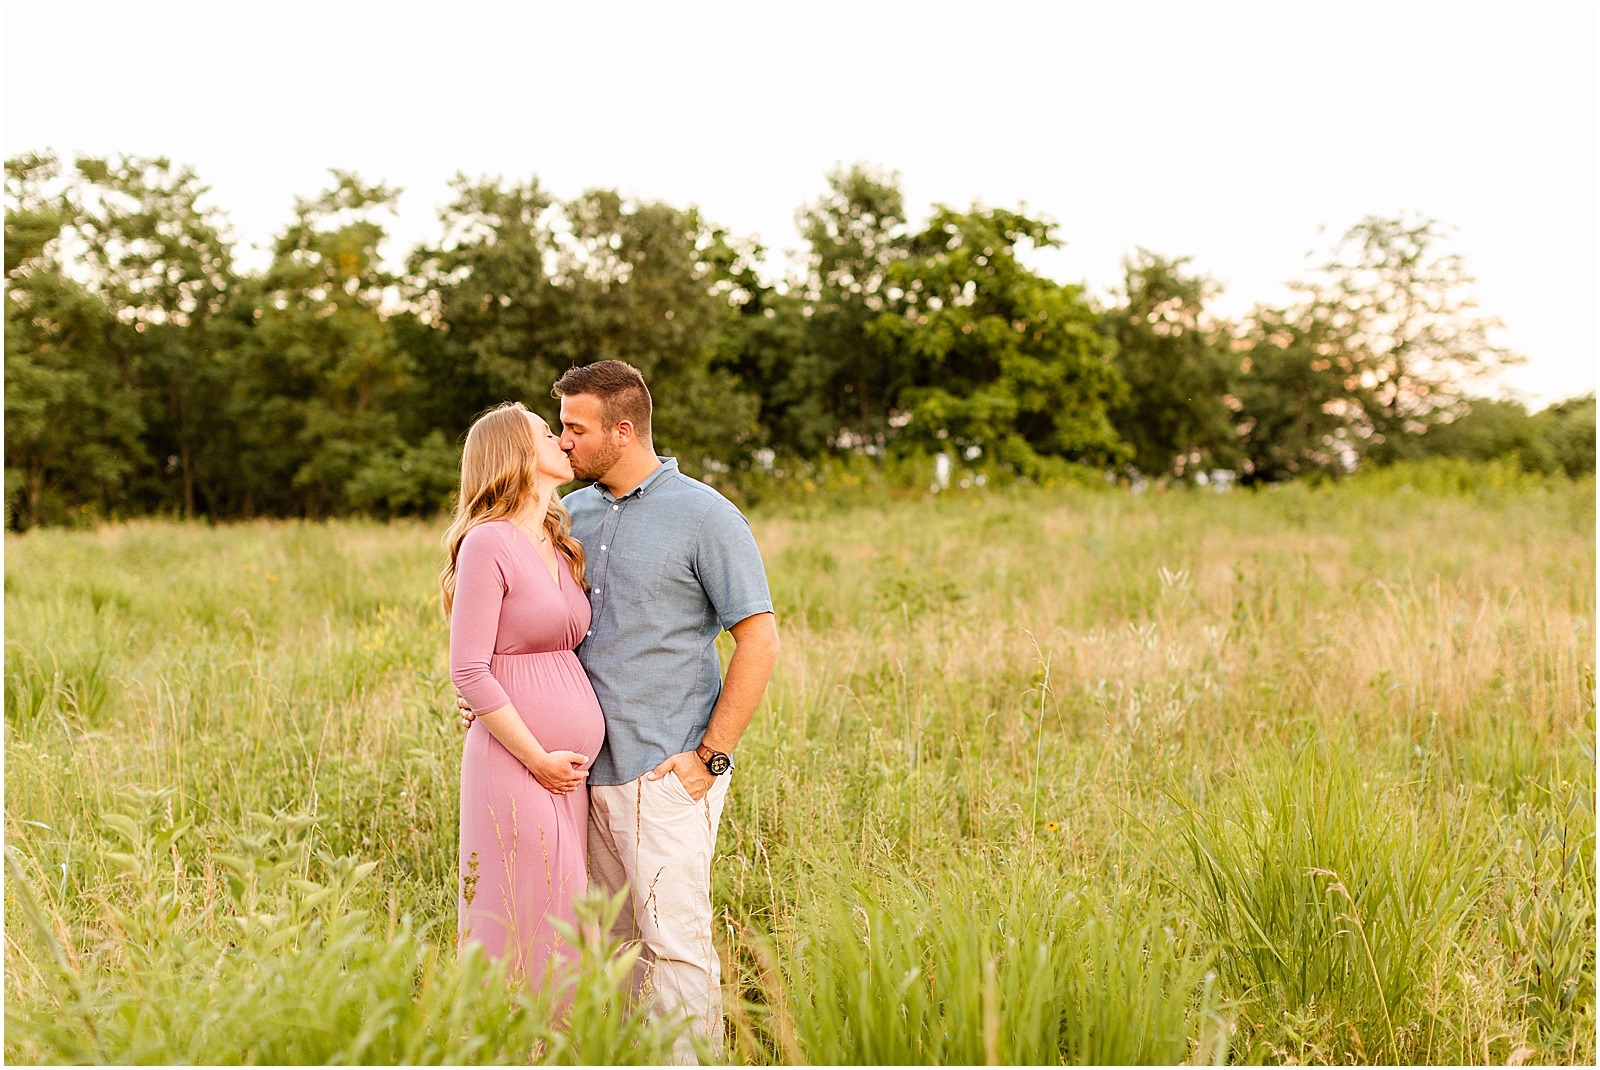 Ellen and Jake | Maternity Session Bret and Brandie | Evansville Photographers | @bretandbrandie-0028.jpg